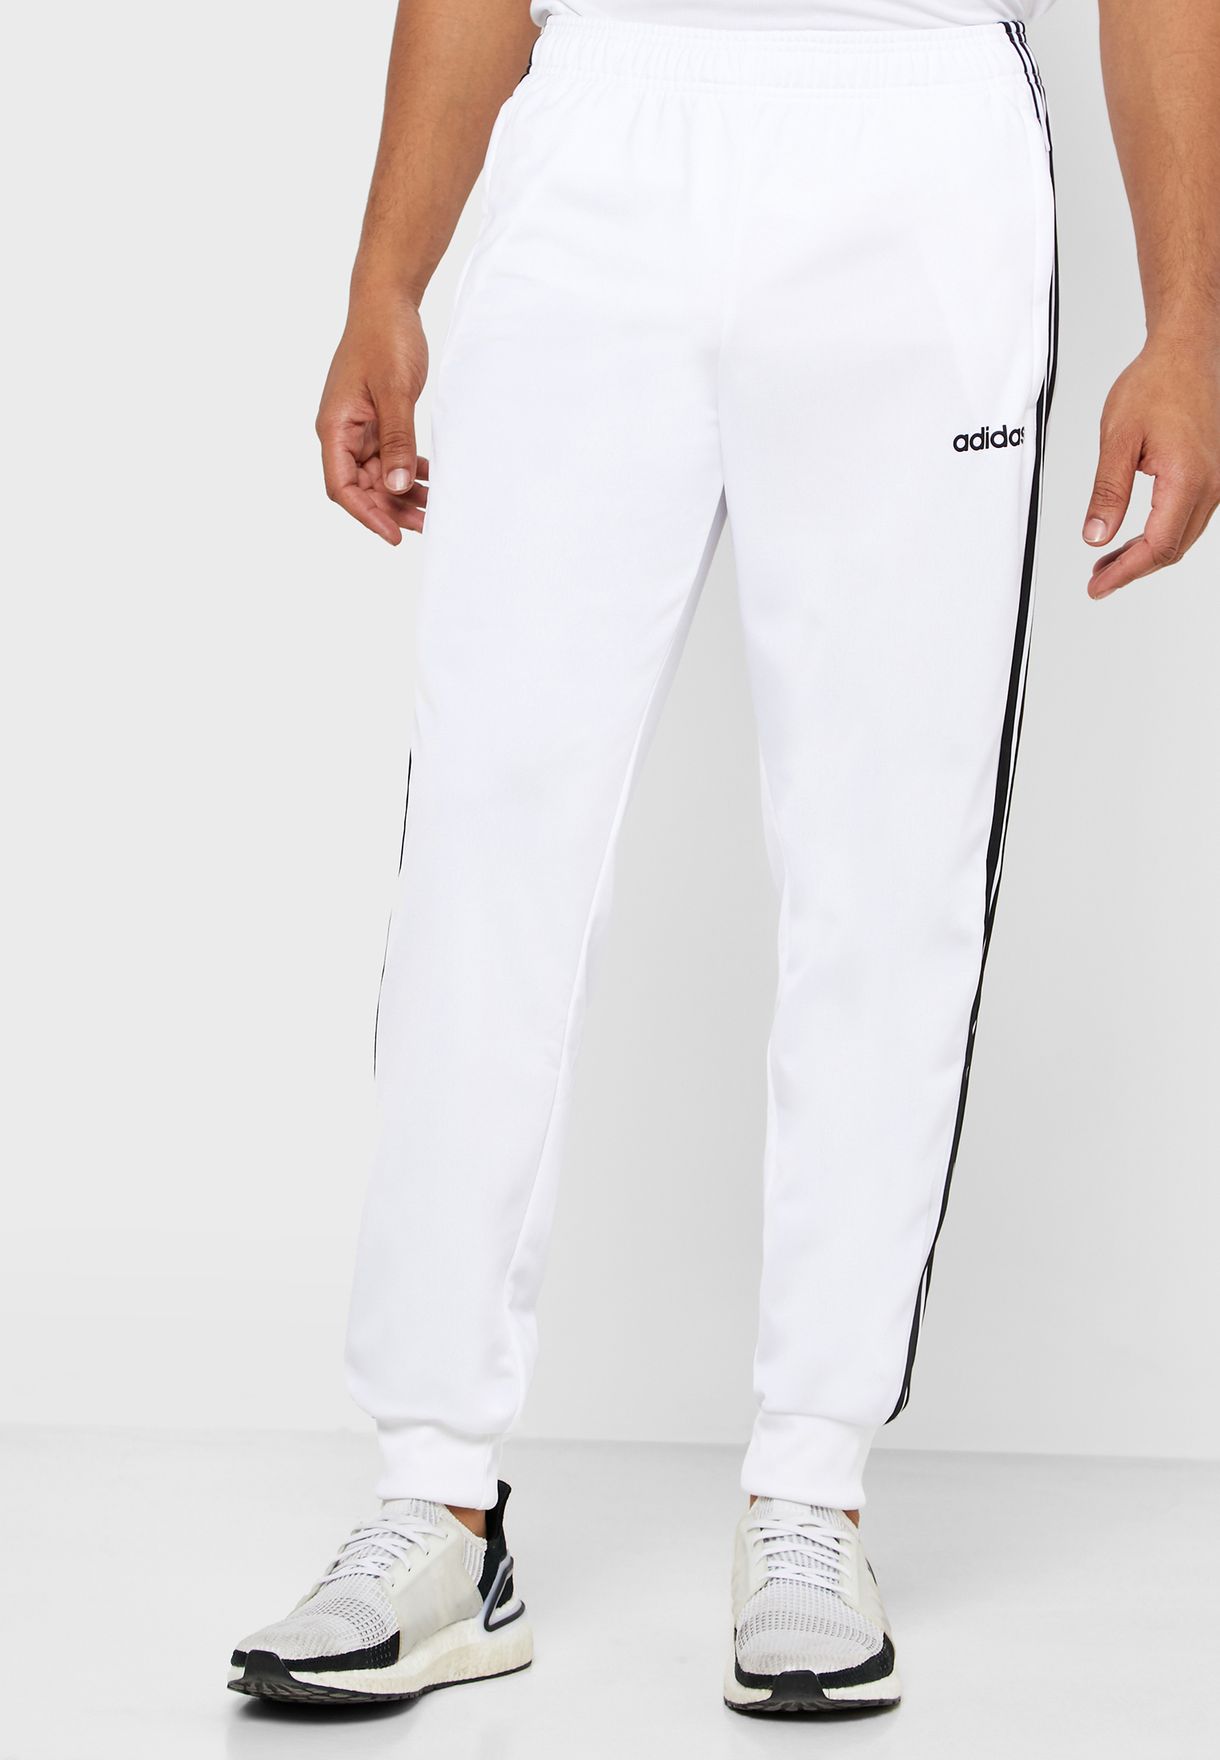 white pants adidas